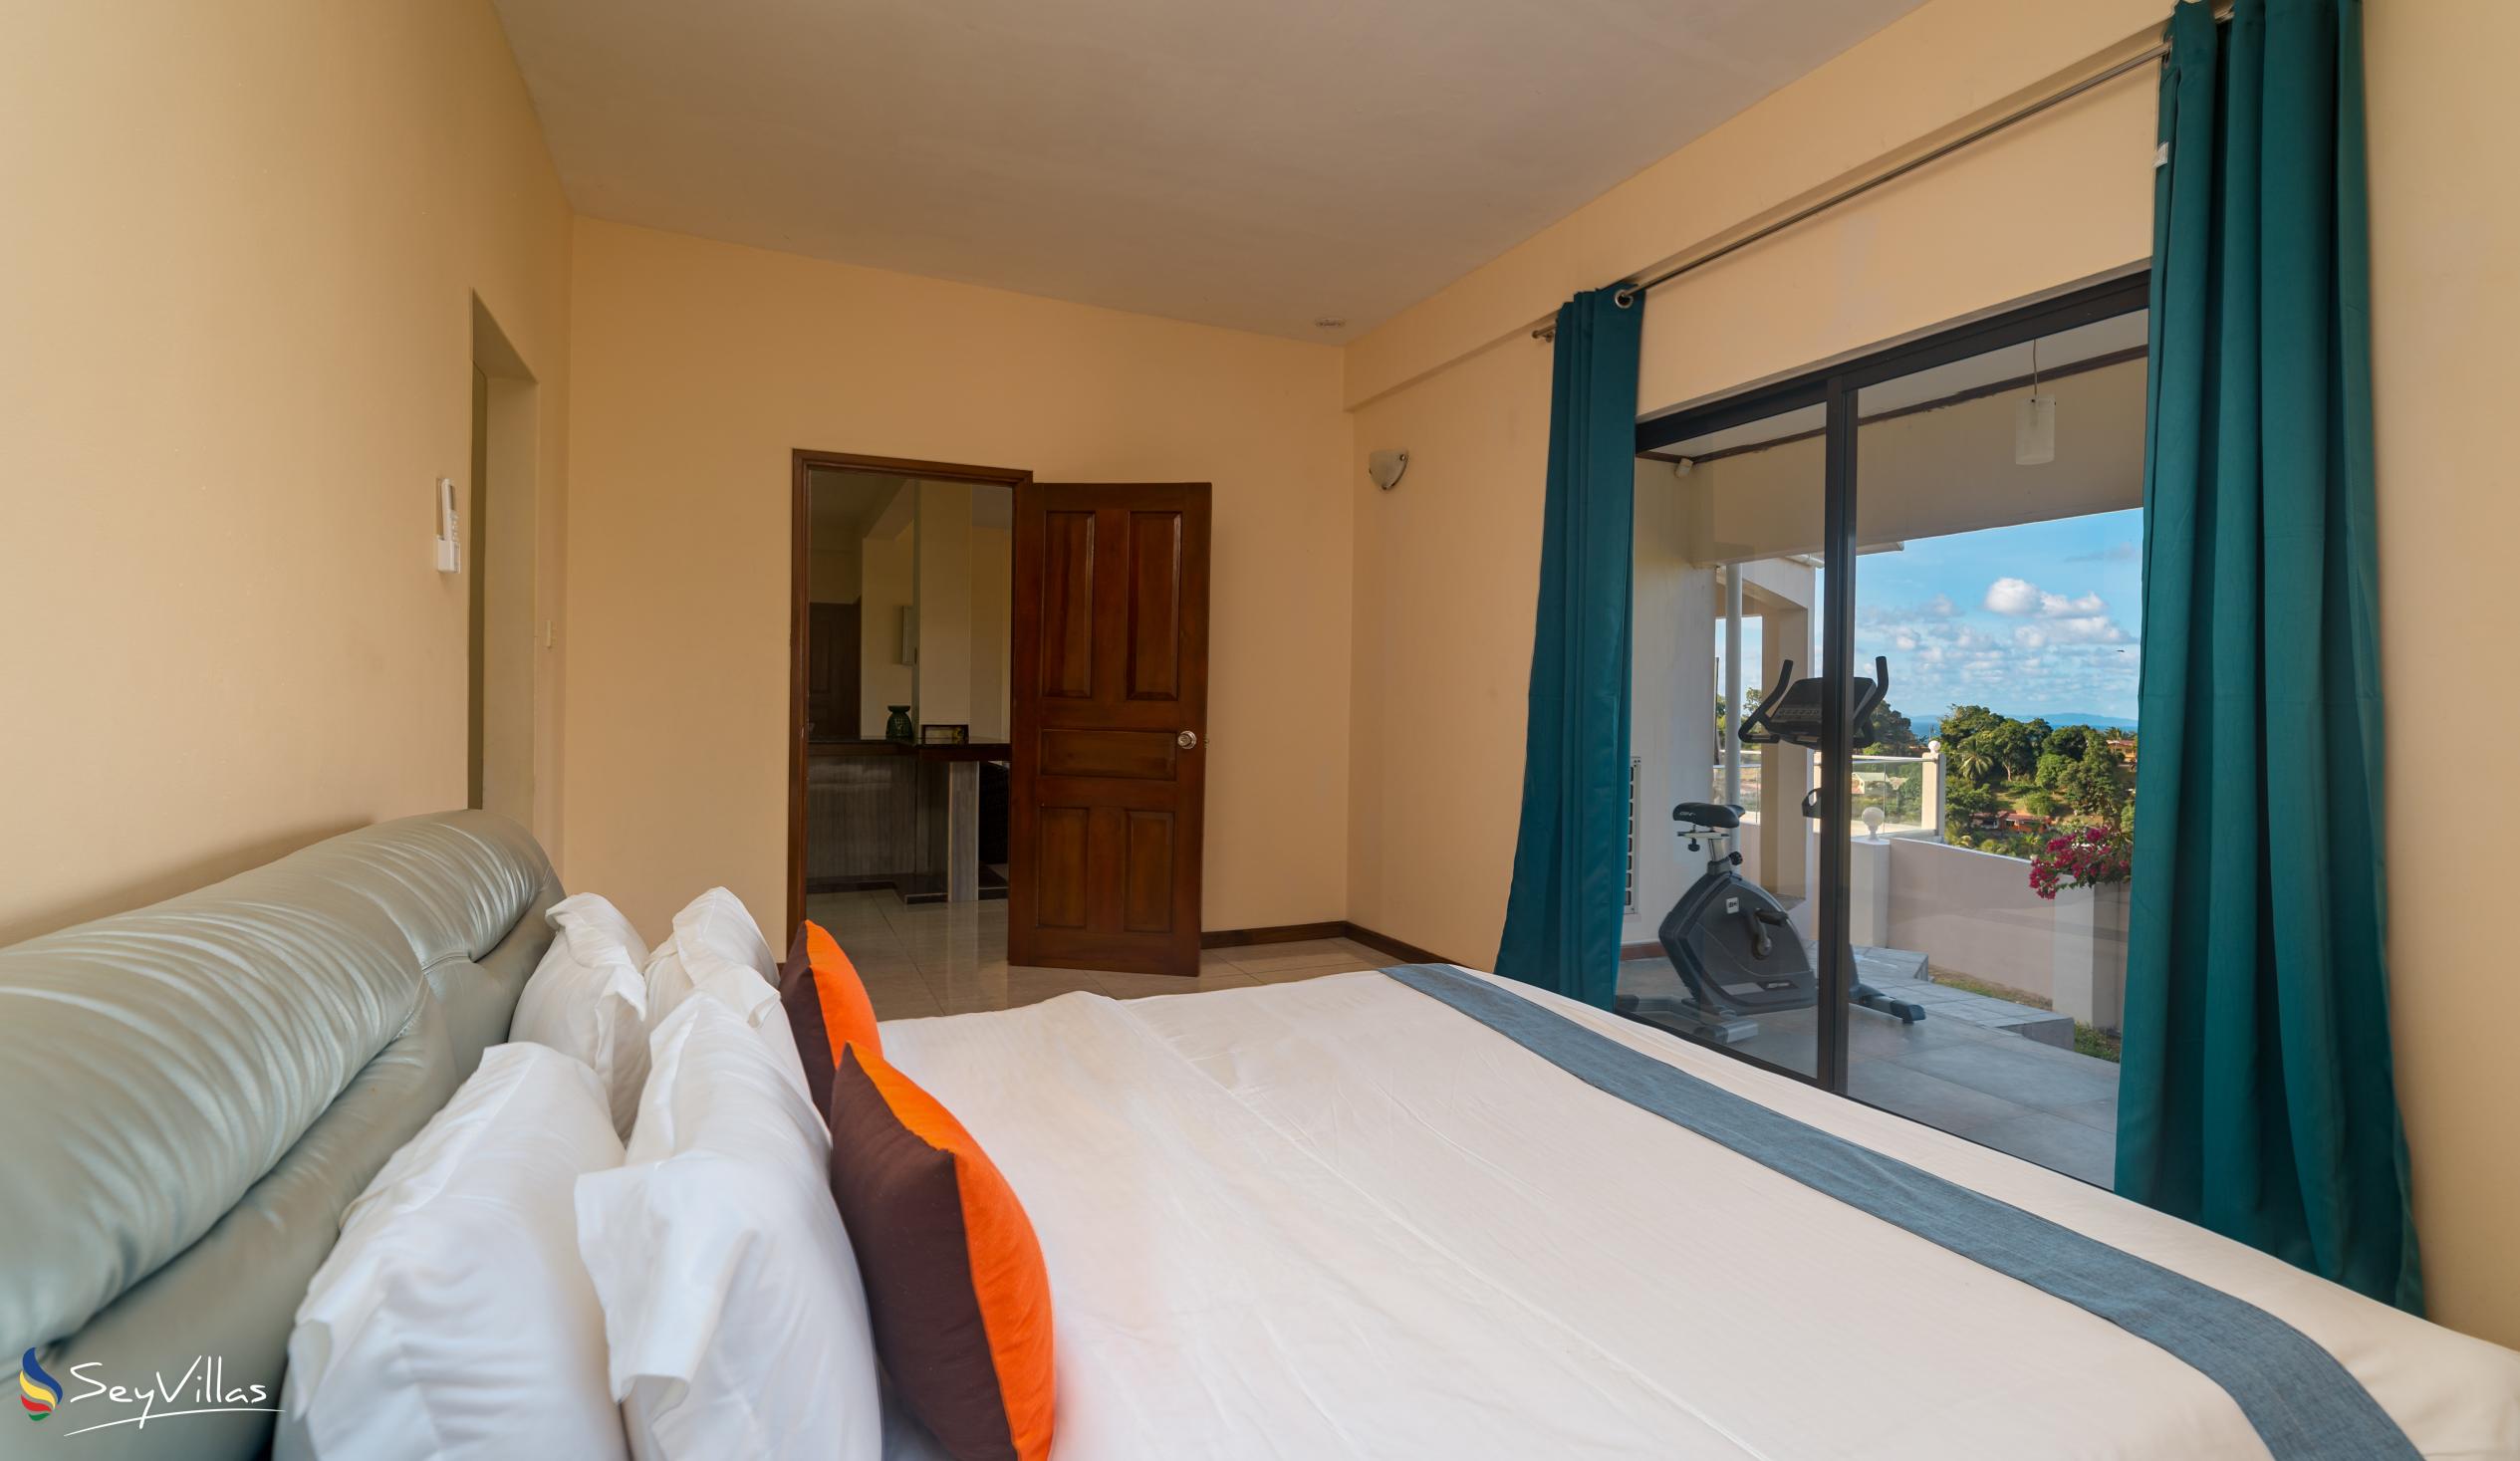 Foto 68: Maison L'Horizon - Appartamento con 2 camere Vann Nor - Mahé (Seychelles)